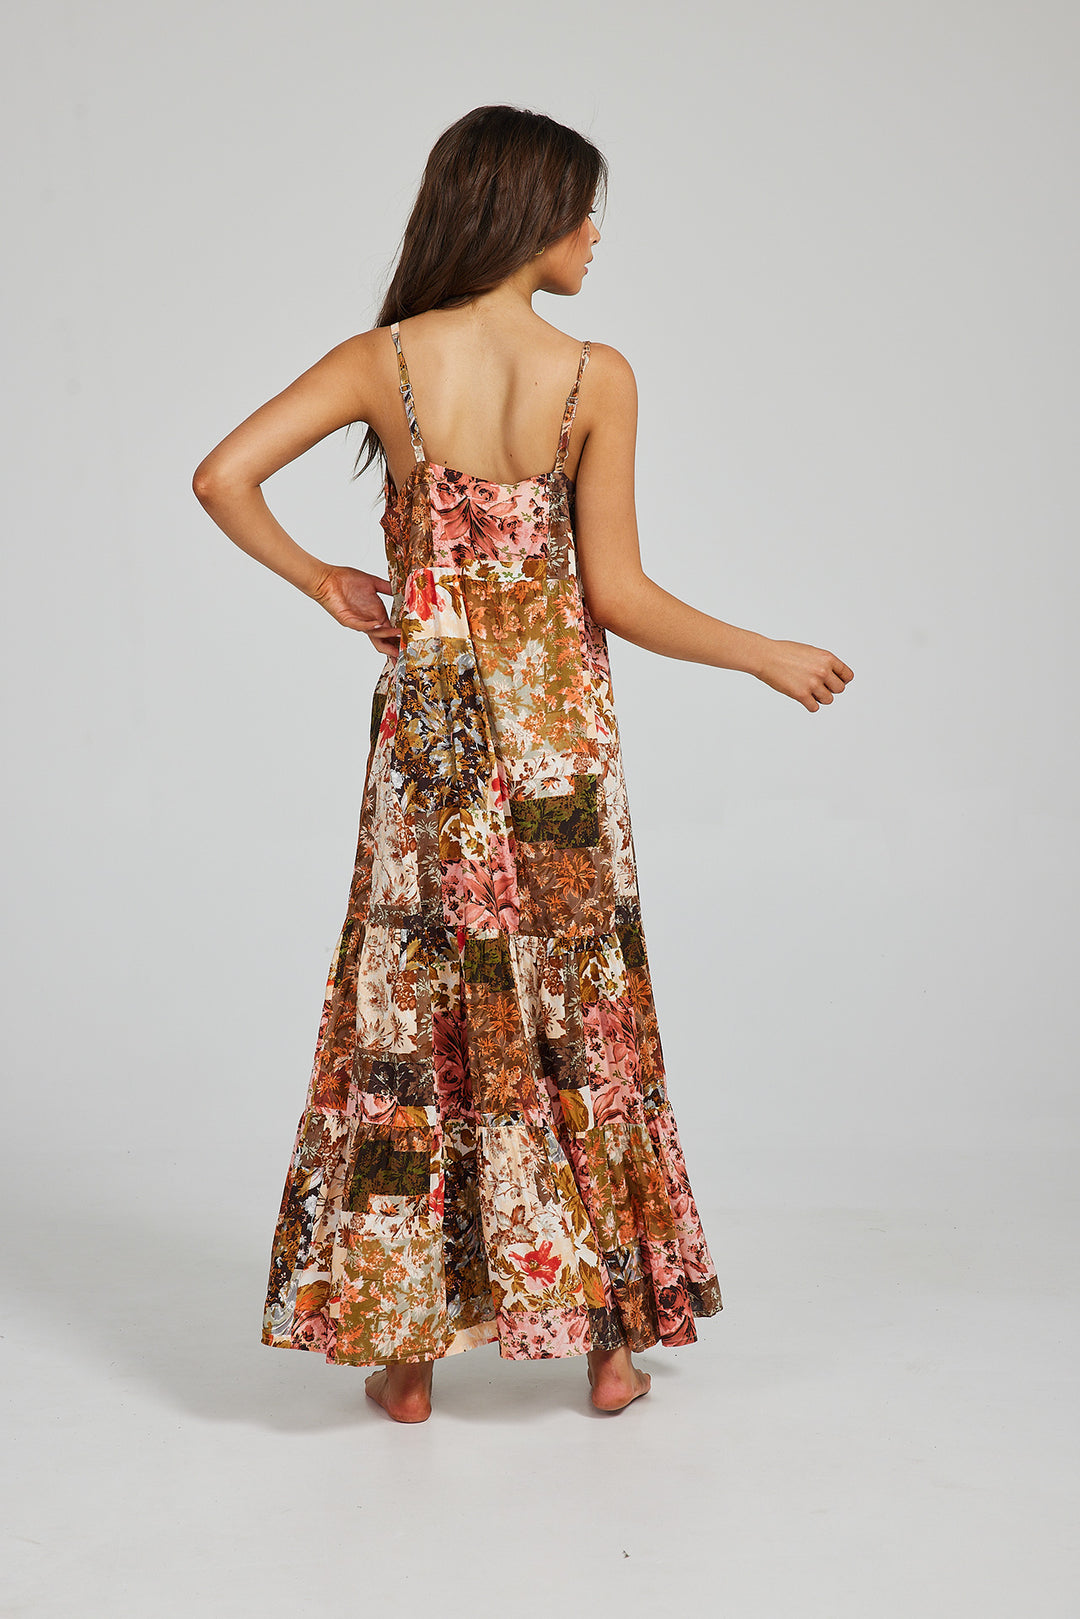 DAHNA DRESS-ENCHANTED PATCHWORK - Kingfisher Road - Online Boutique